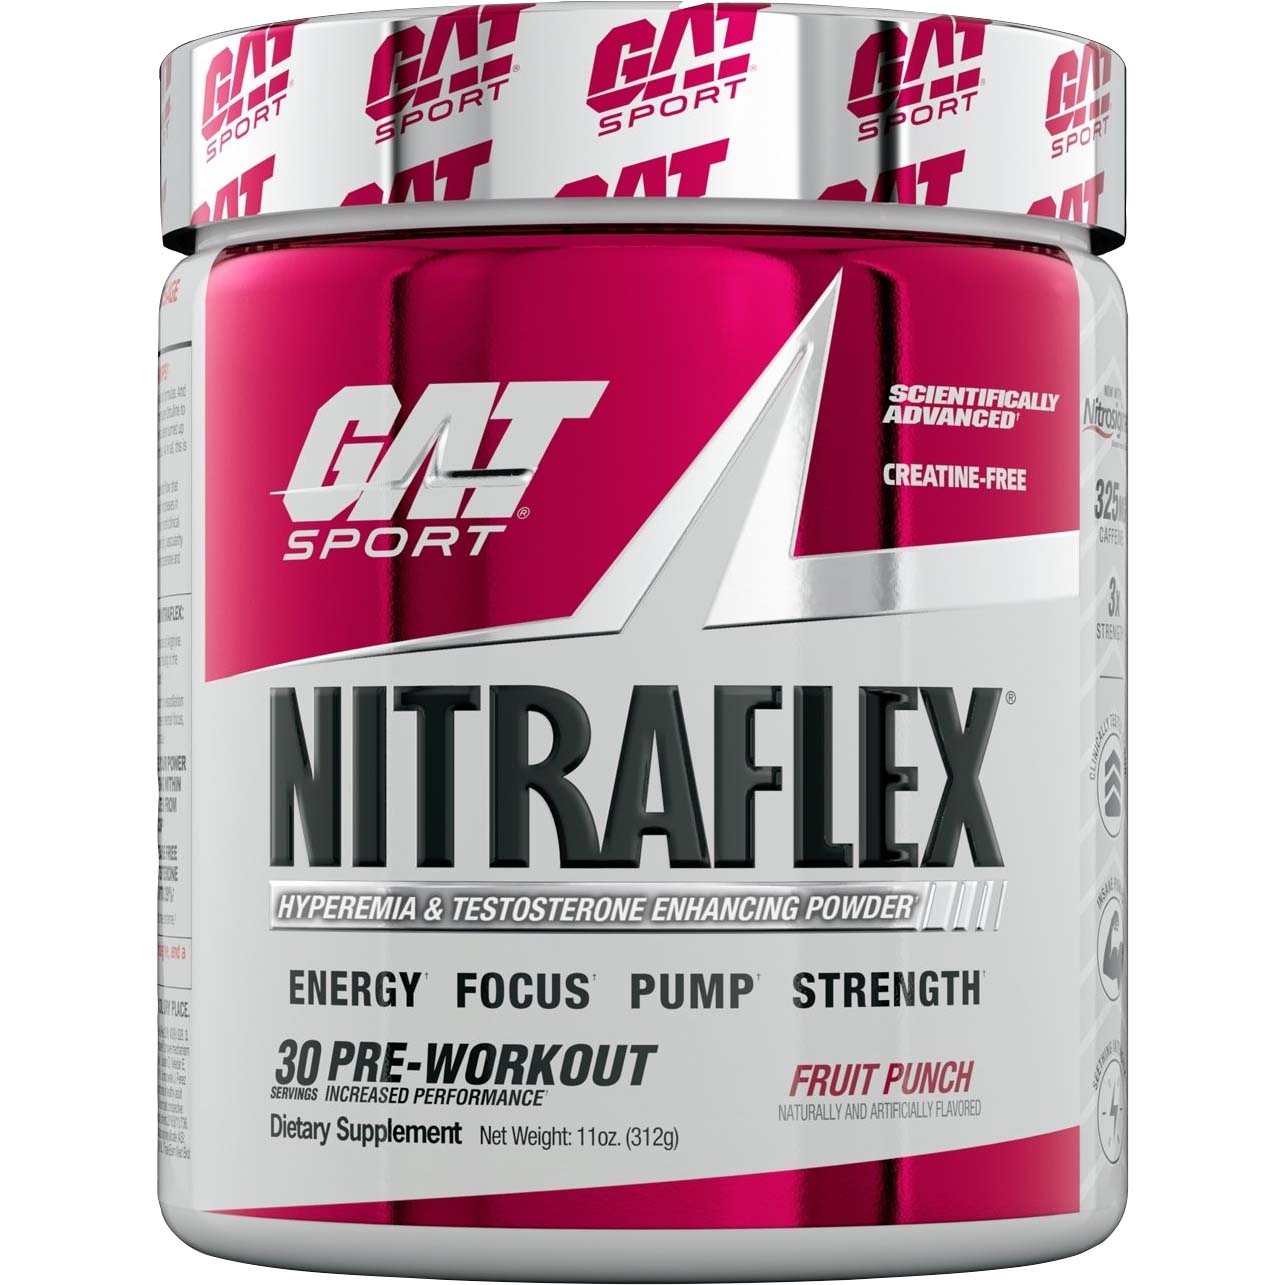 Gat Sport Nitraflex Testosterone Boosting Powder, Fruit Punch, 30